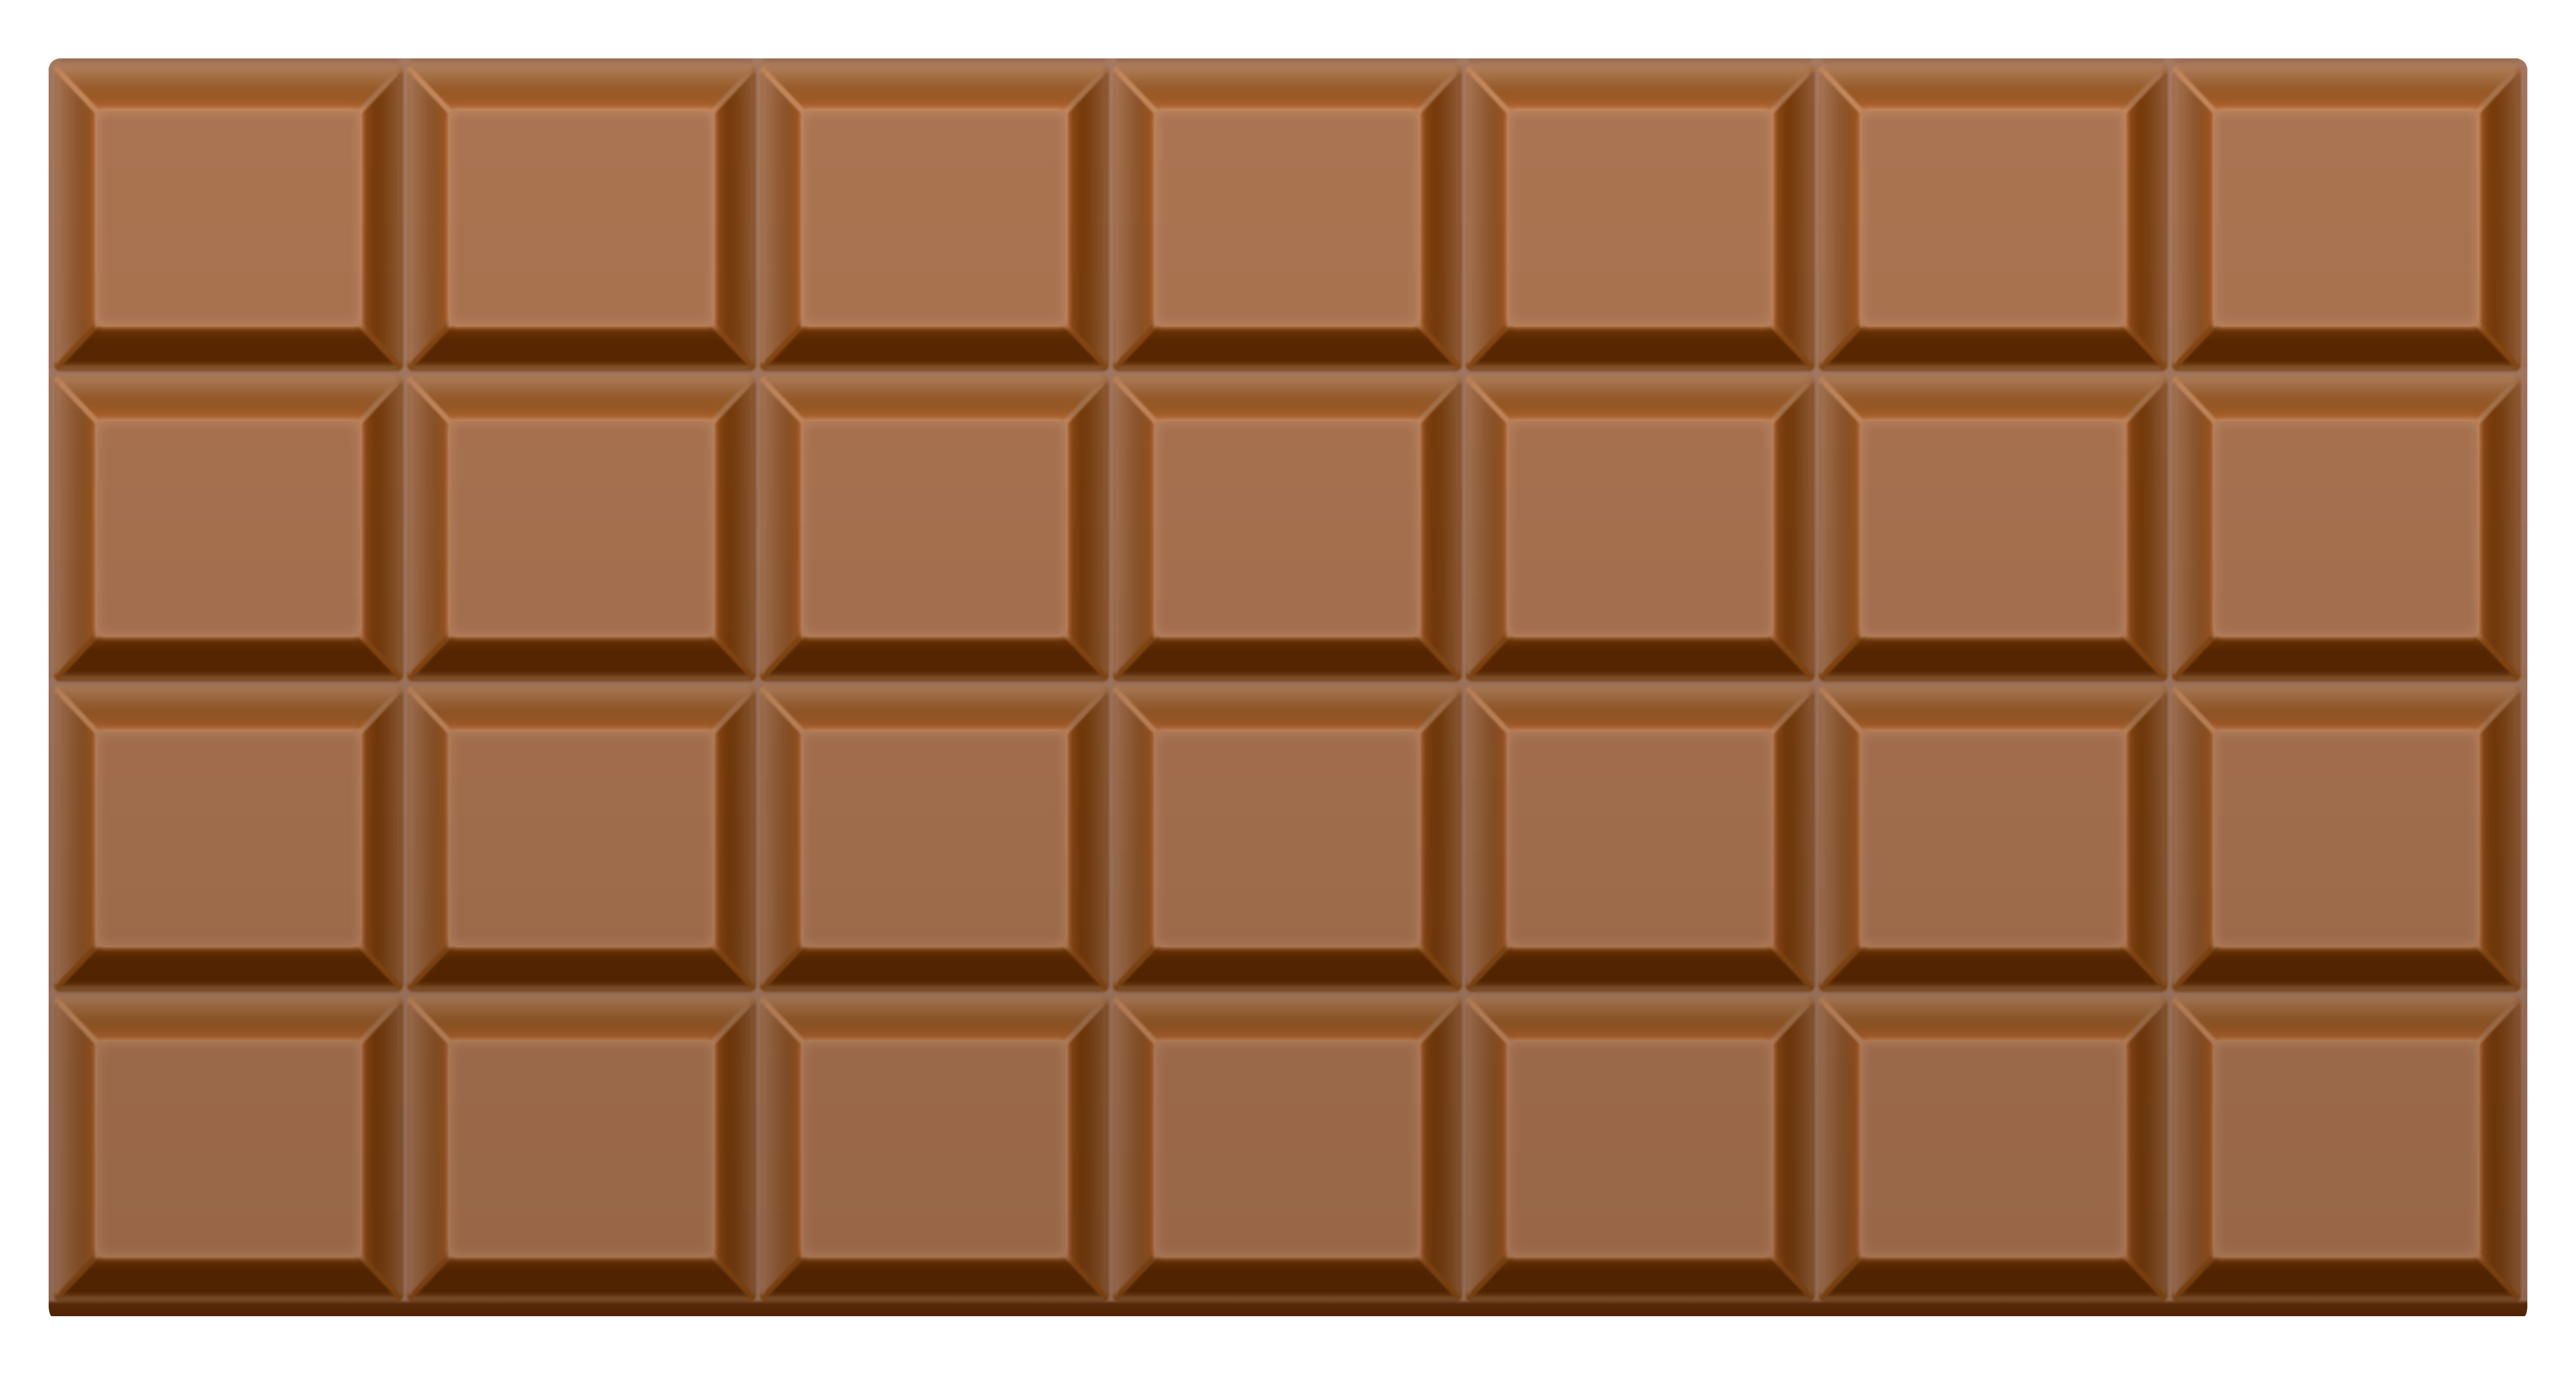 Chocolate Candy Bar Clipart.